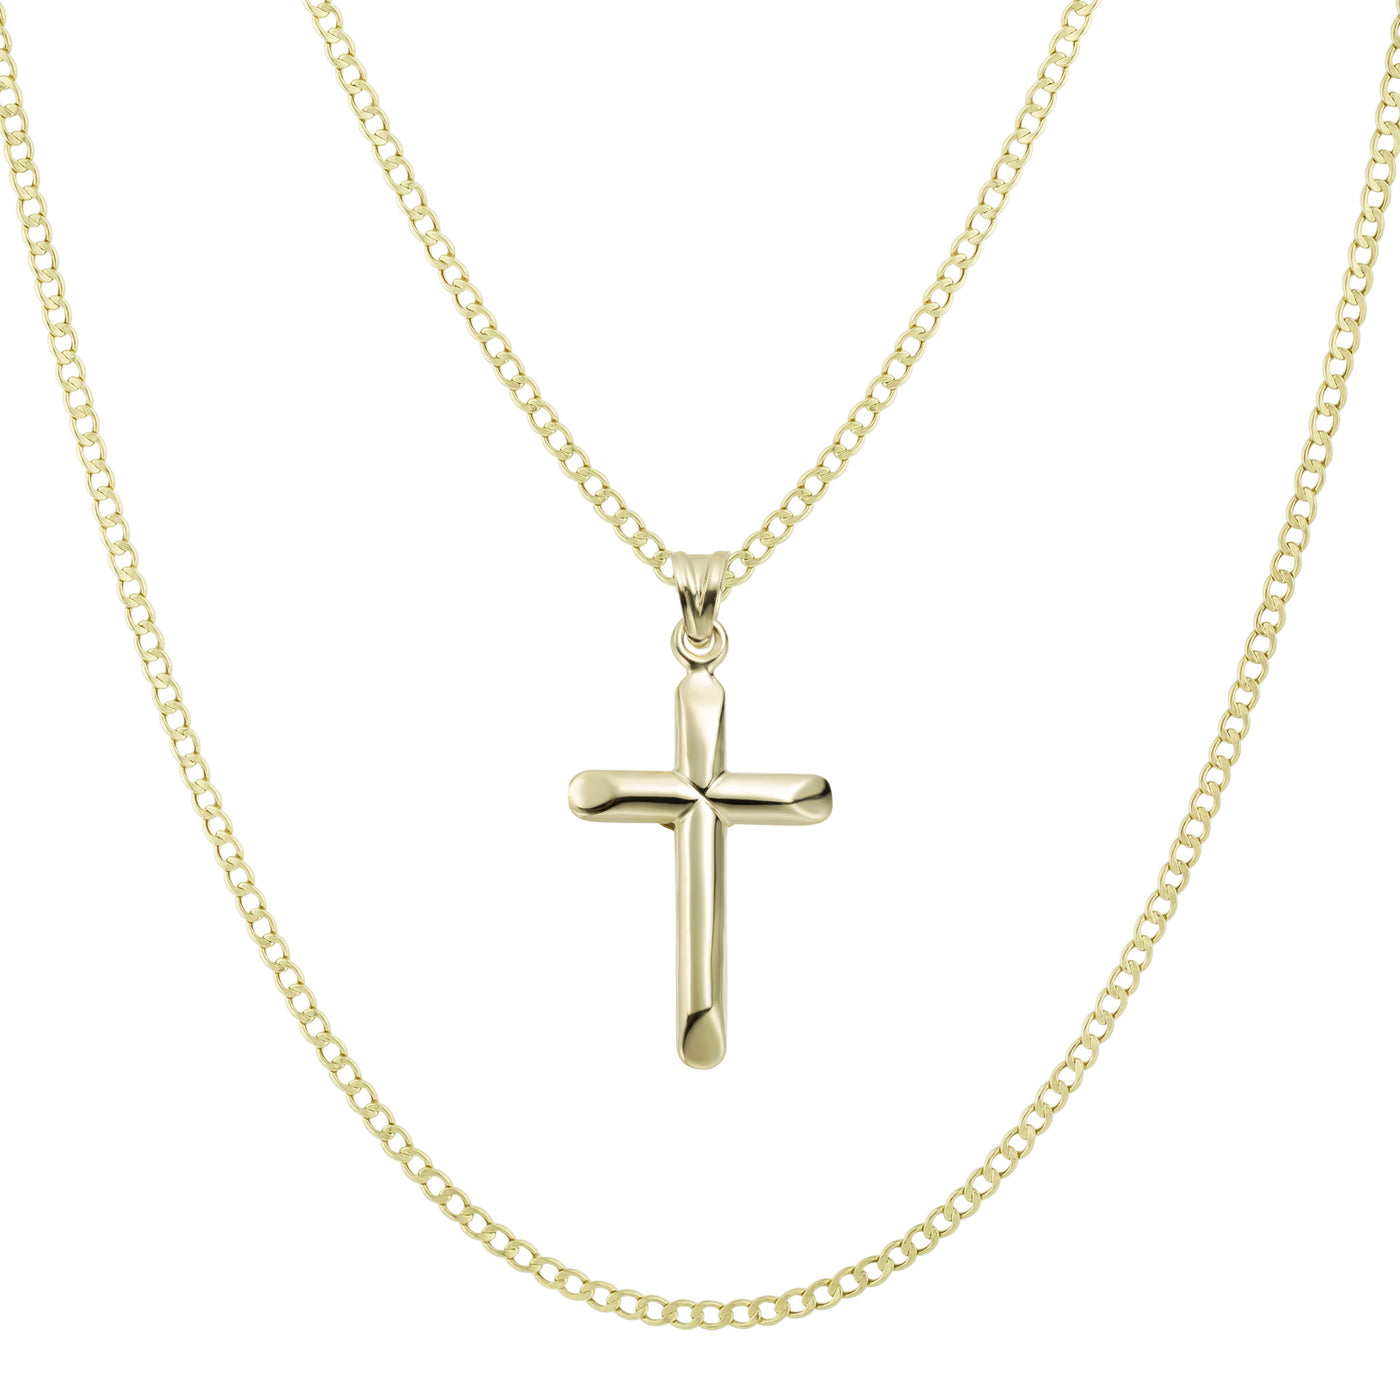 1 1/2" Diamond Cut Jesus Cross Crucifix Two-Tone Pendant & Chain Necklace Set 10K Yellow White Gold